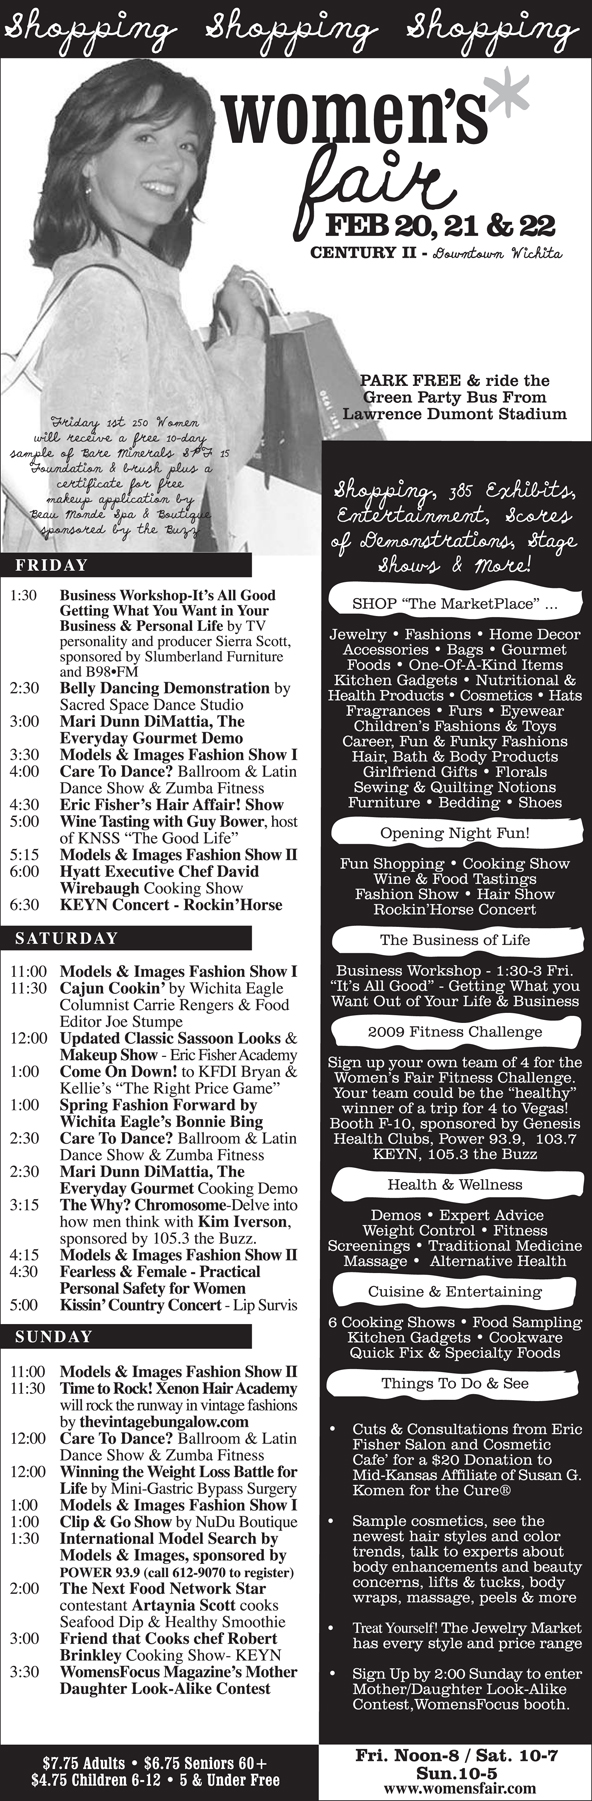 Women's Fair 2009 Schedule